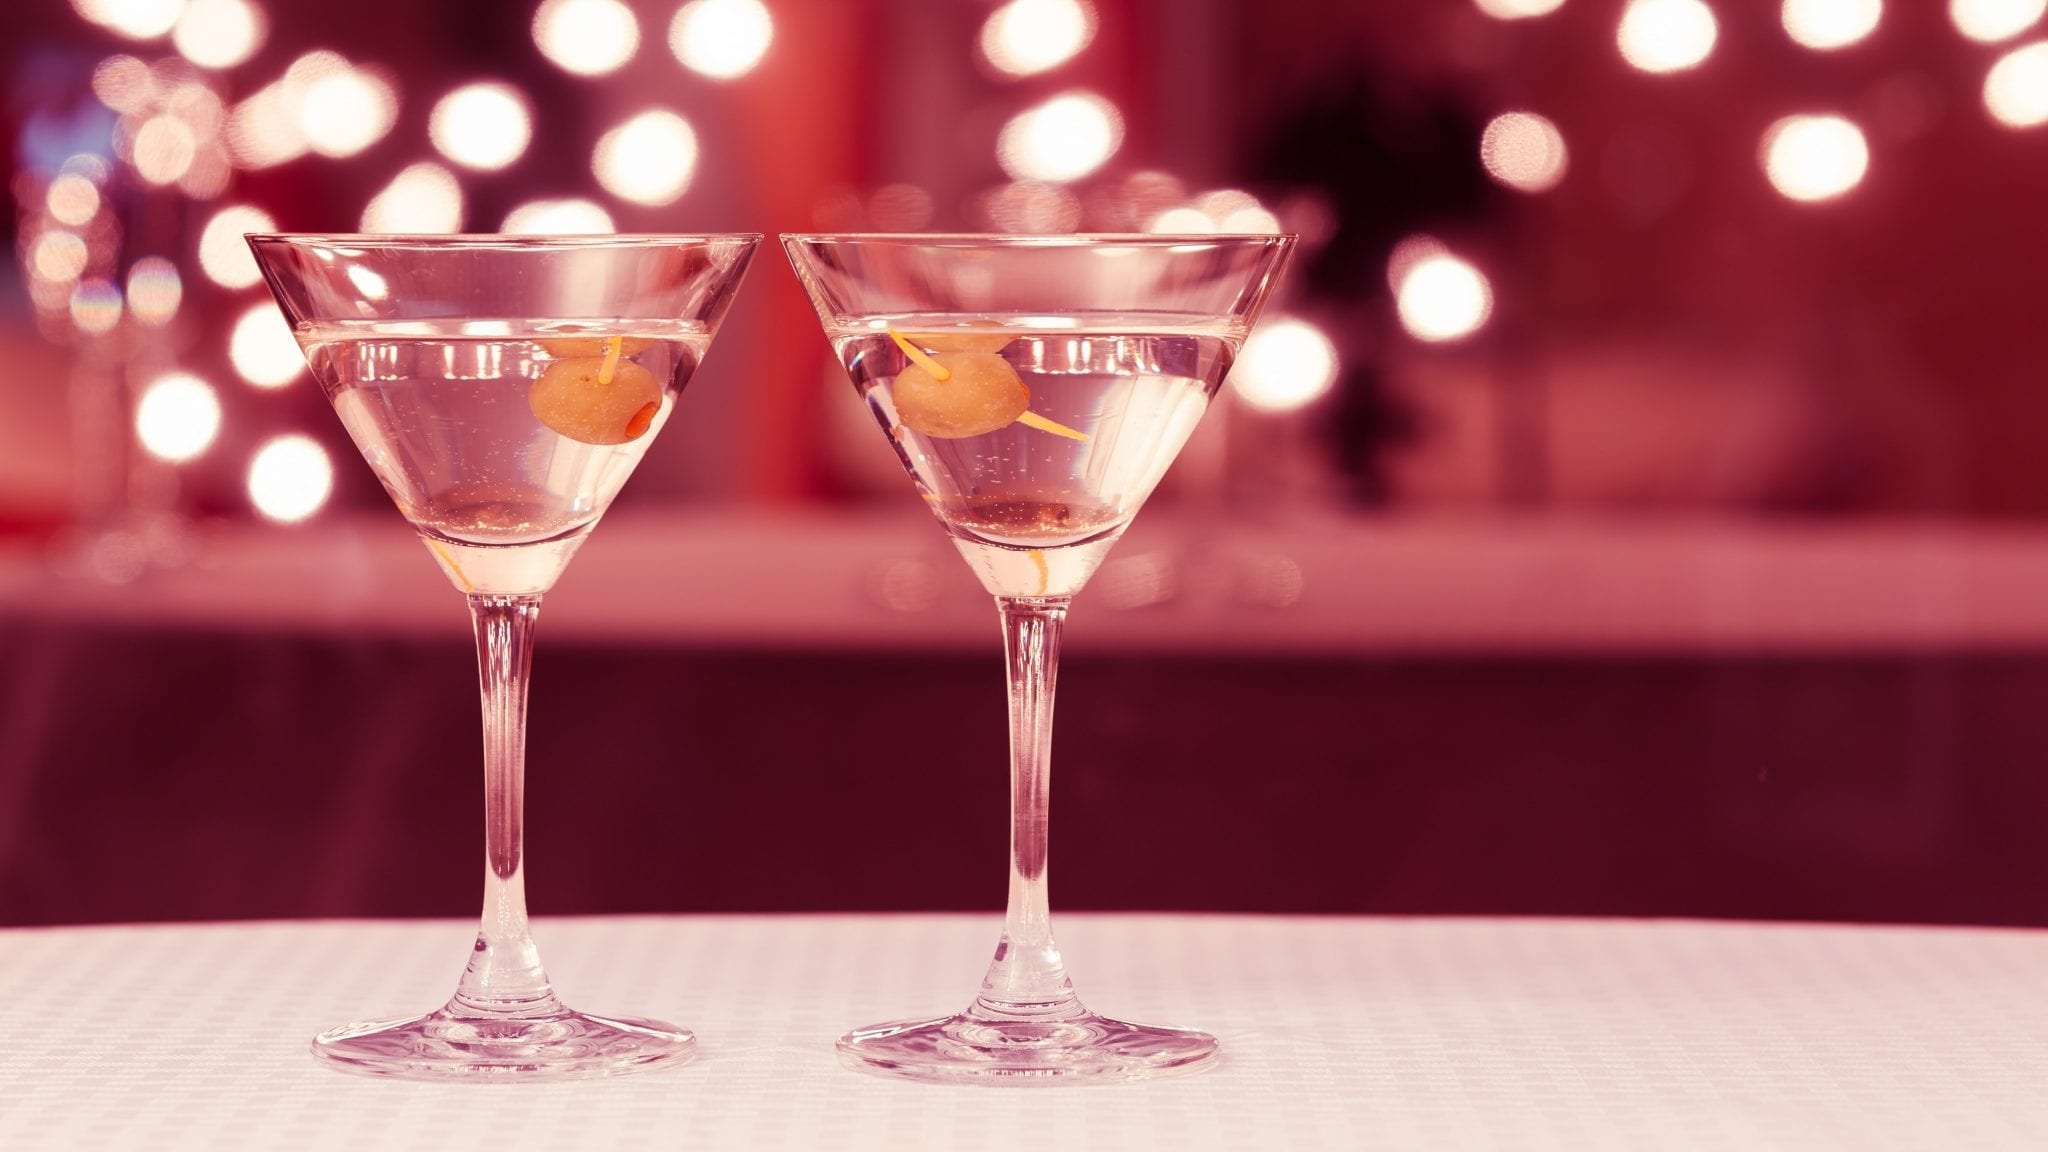 Martini glasses in a bar setting